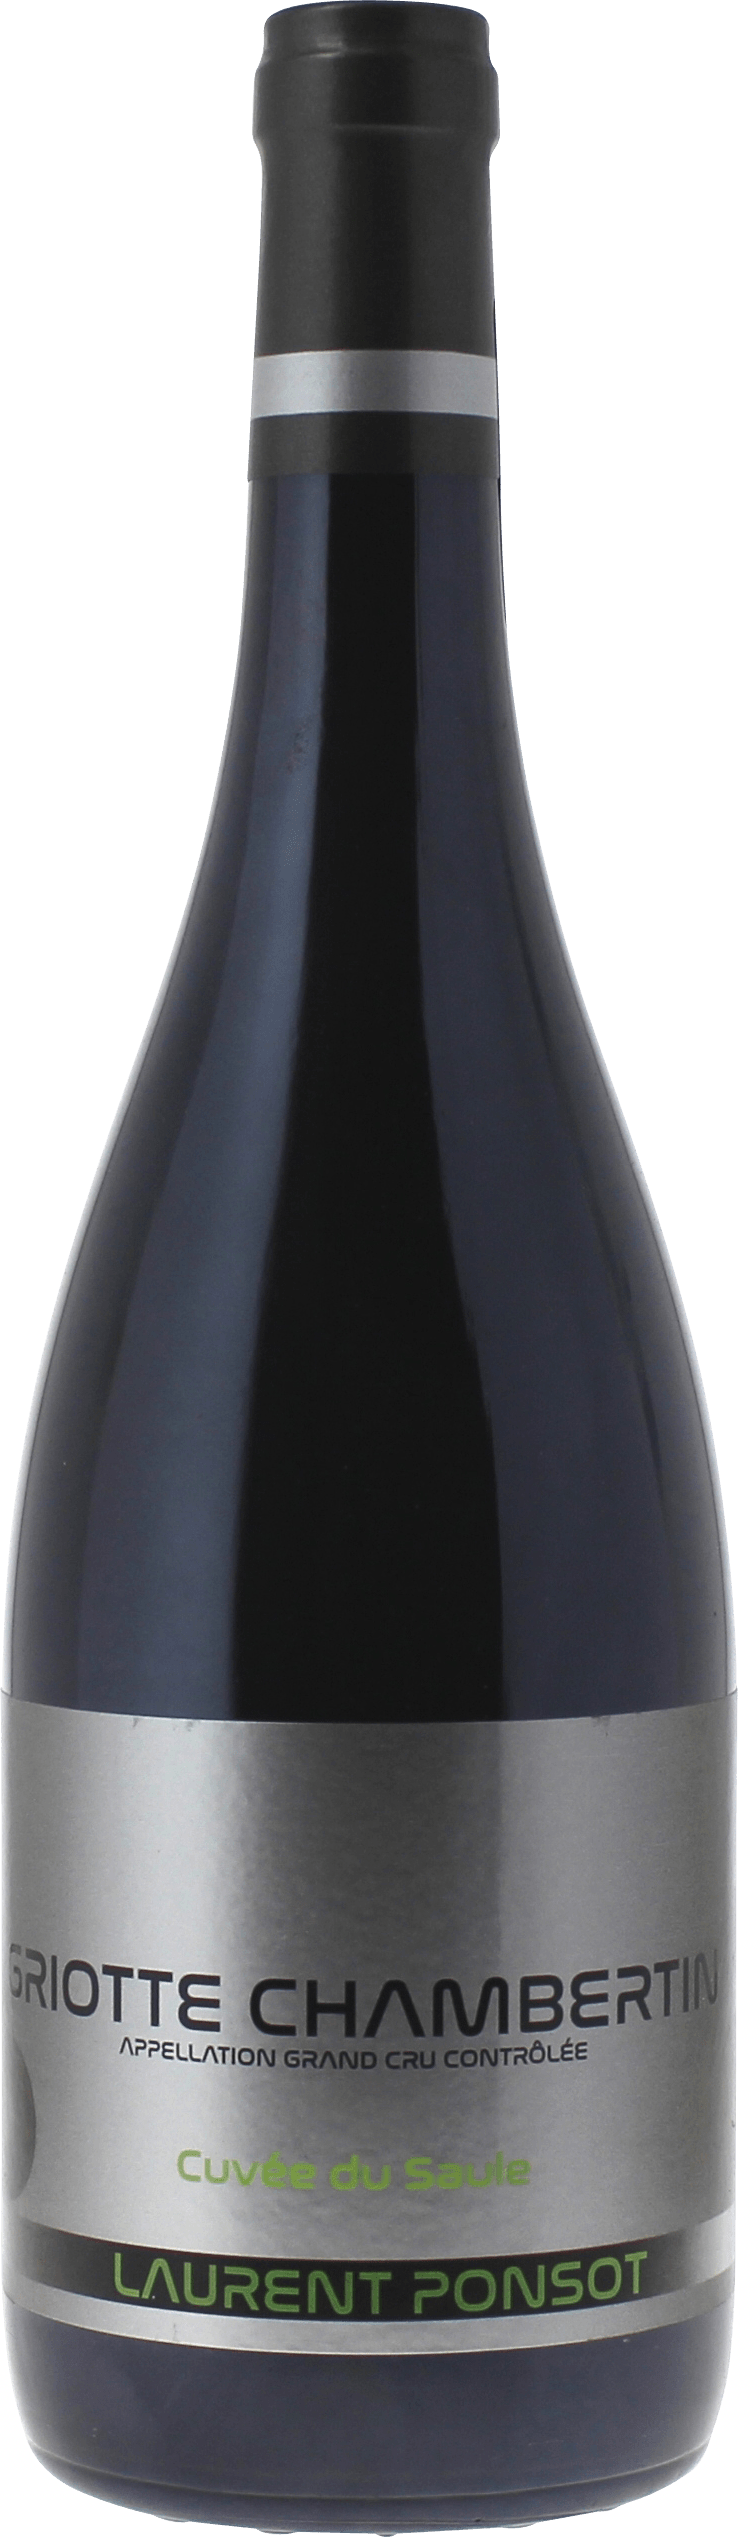 Griotte chambertin cuve du saule 2016  Laurent PONSOT, Bourgogne rouge